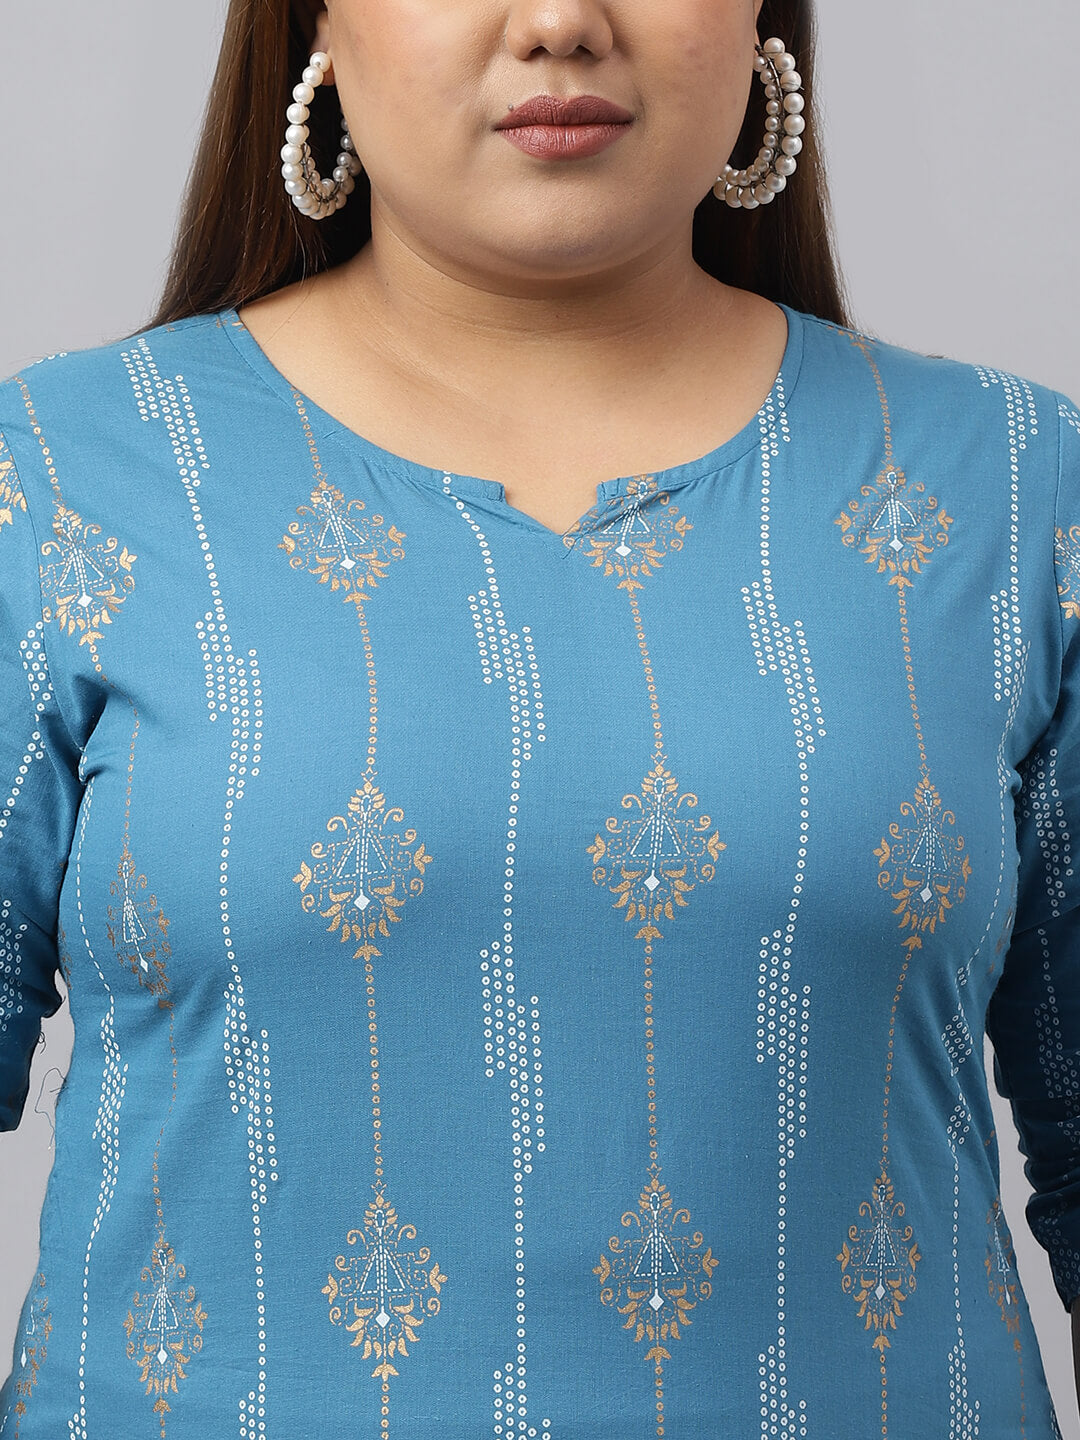 XL LOVE by Janasya Women's Plus Size Blue Cotton Ethnic Motifs Straight kurta